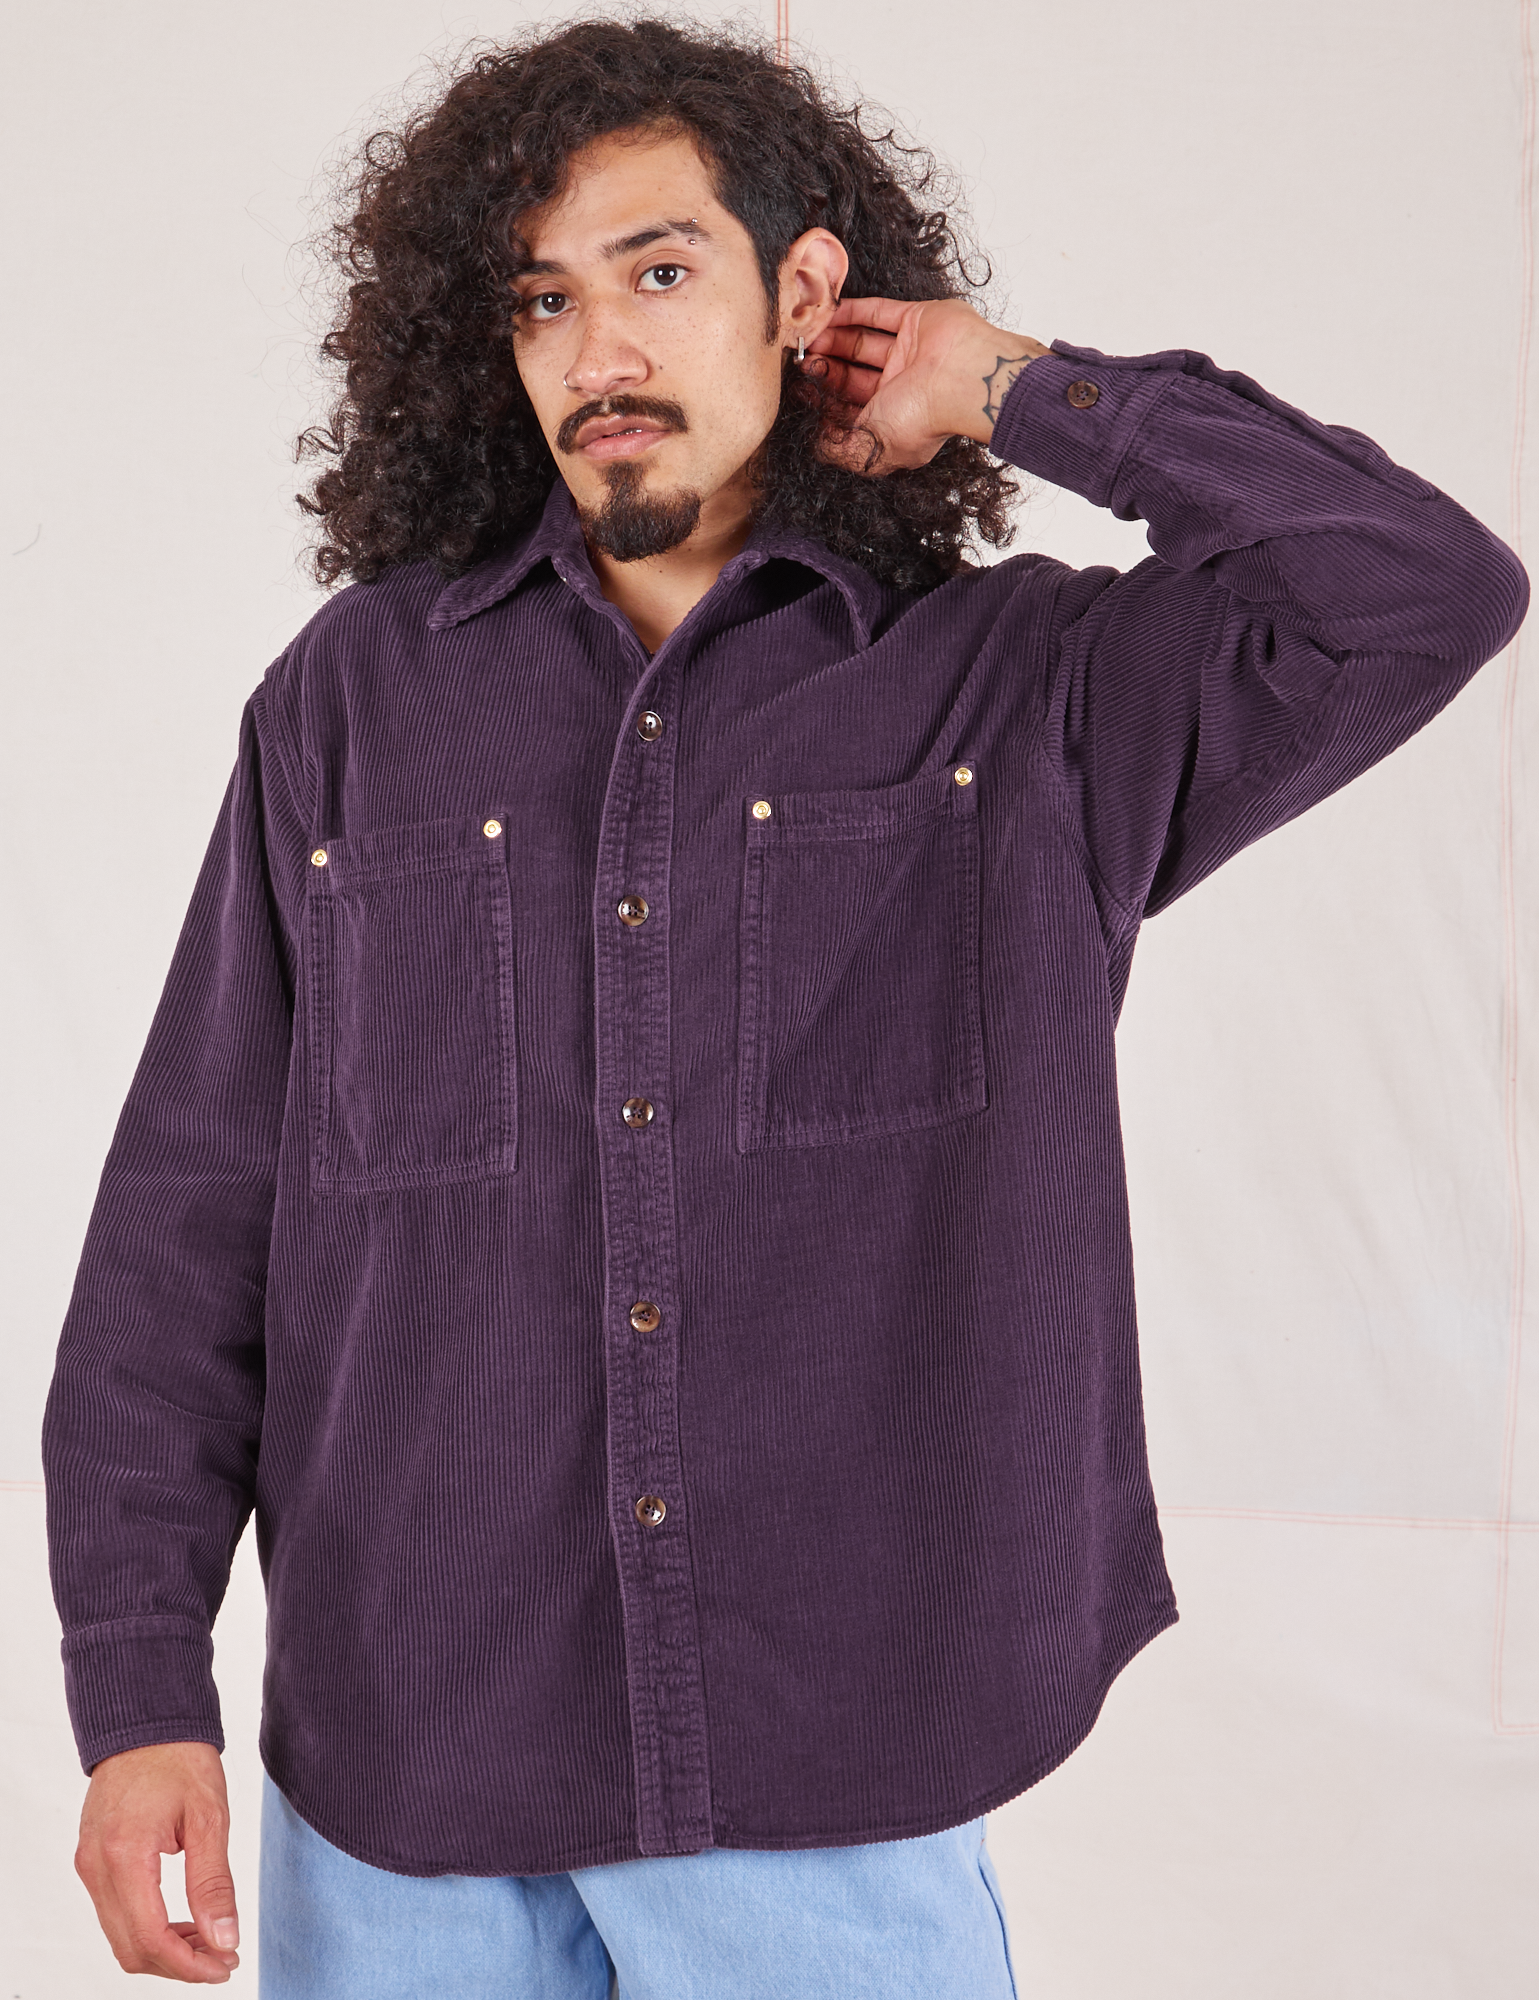 Jesse is 5&#39;8&quot; and wearing XS Corduroy Overshirt in Nebula Purple